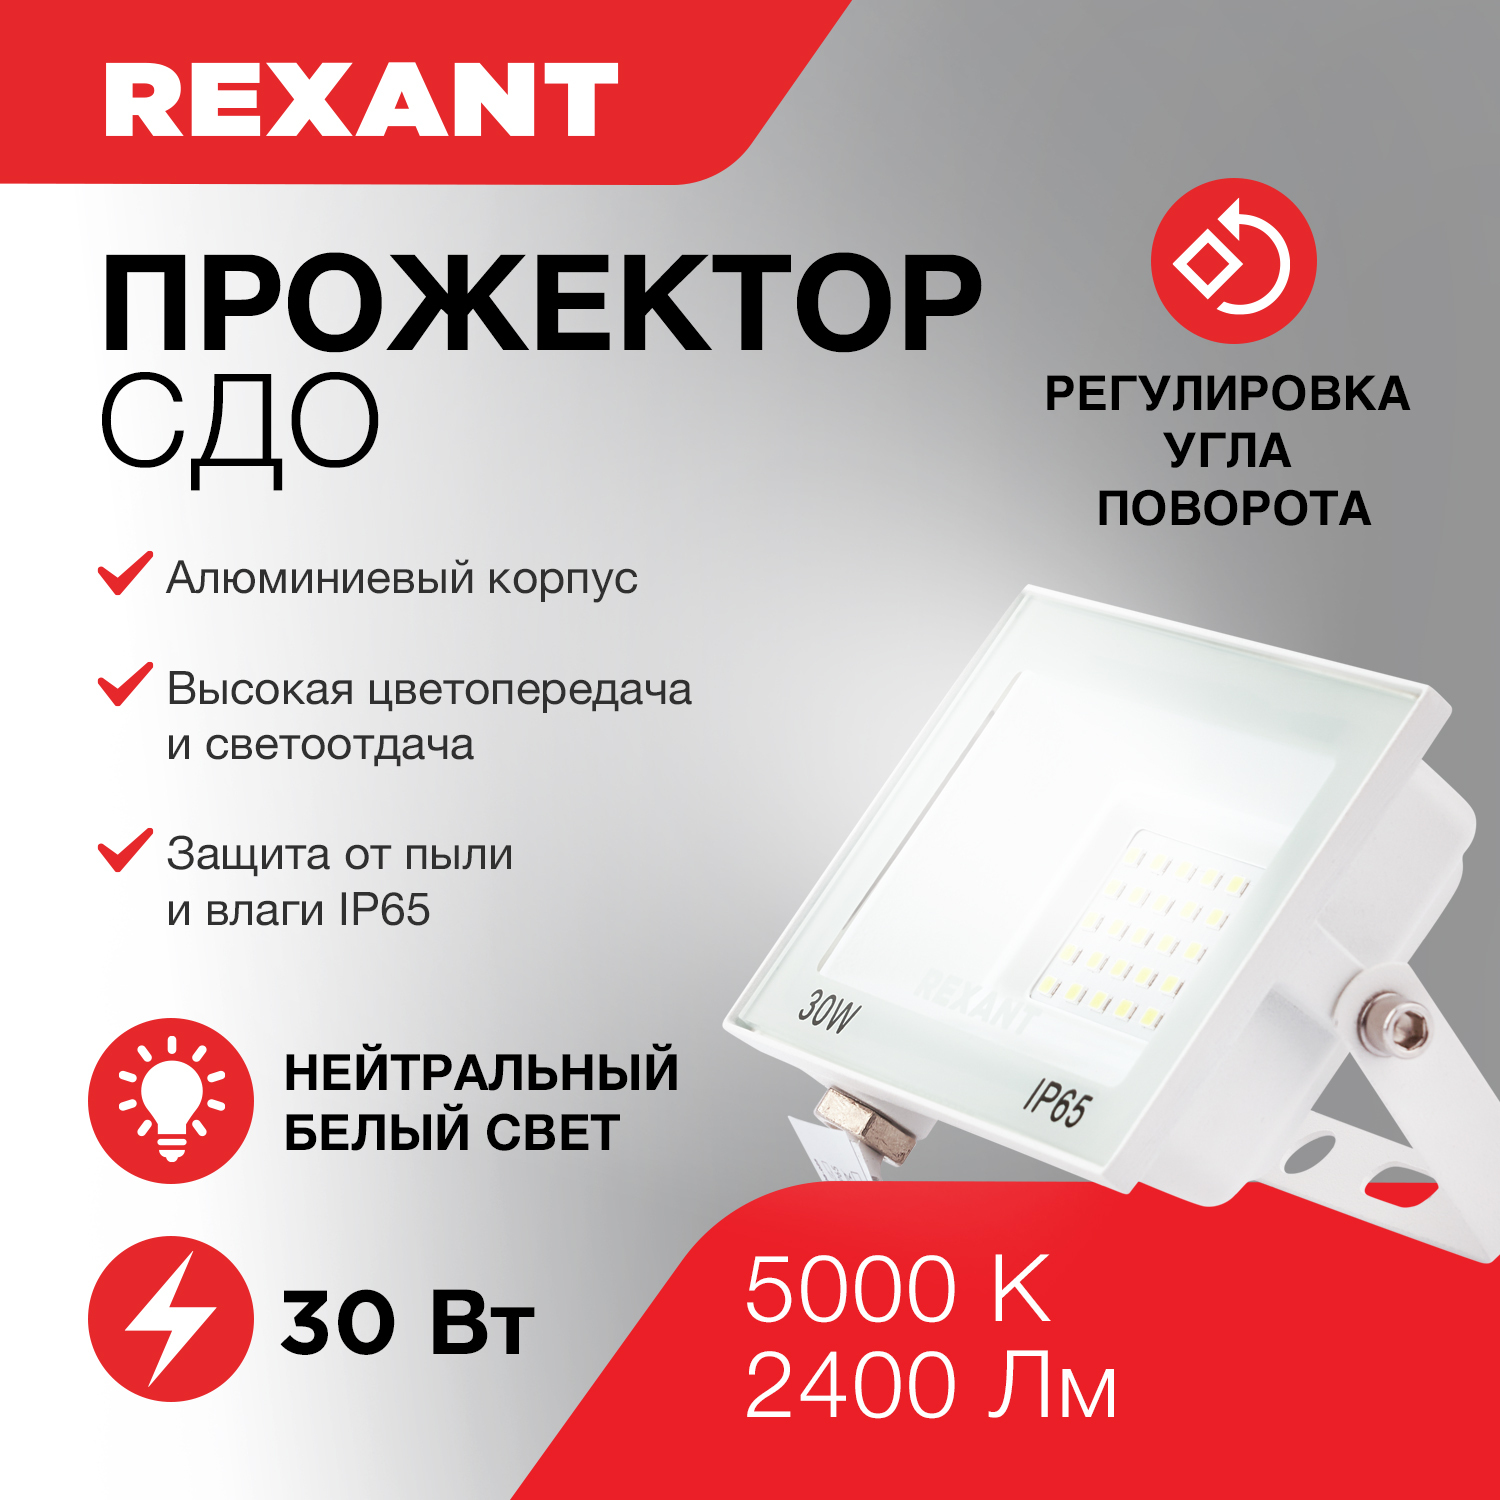 Прожекторы rexant. 605-025 Прожектор Rexant СДО 30 Вт 2400 лм 5000 k белый корпус. Led прожектор Rexant отзывы.